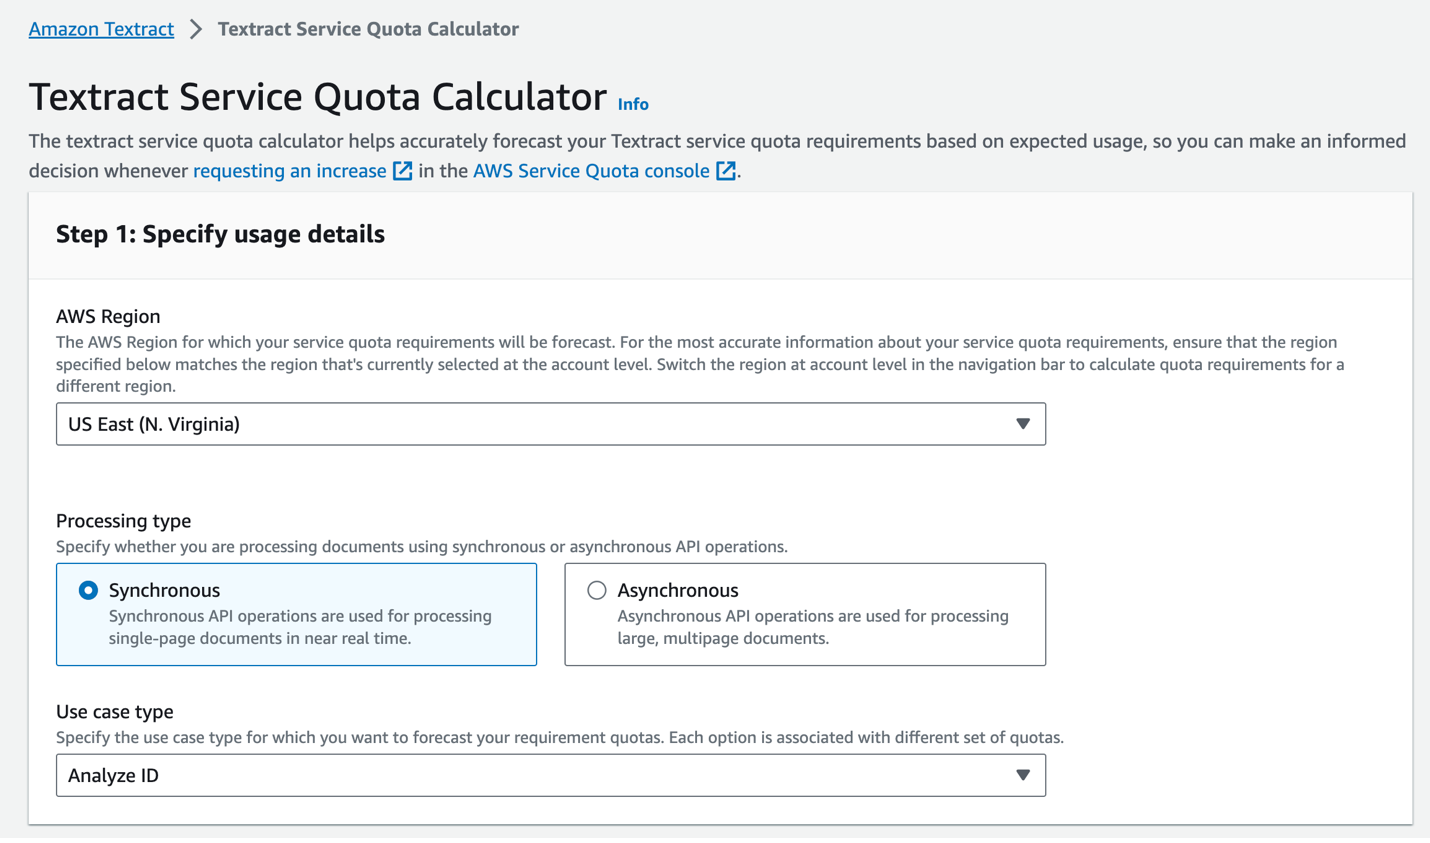  Figure 2. Amazon Textract Service Quota Calculator. By author.